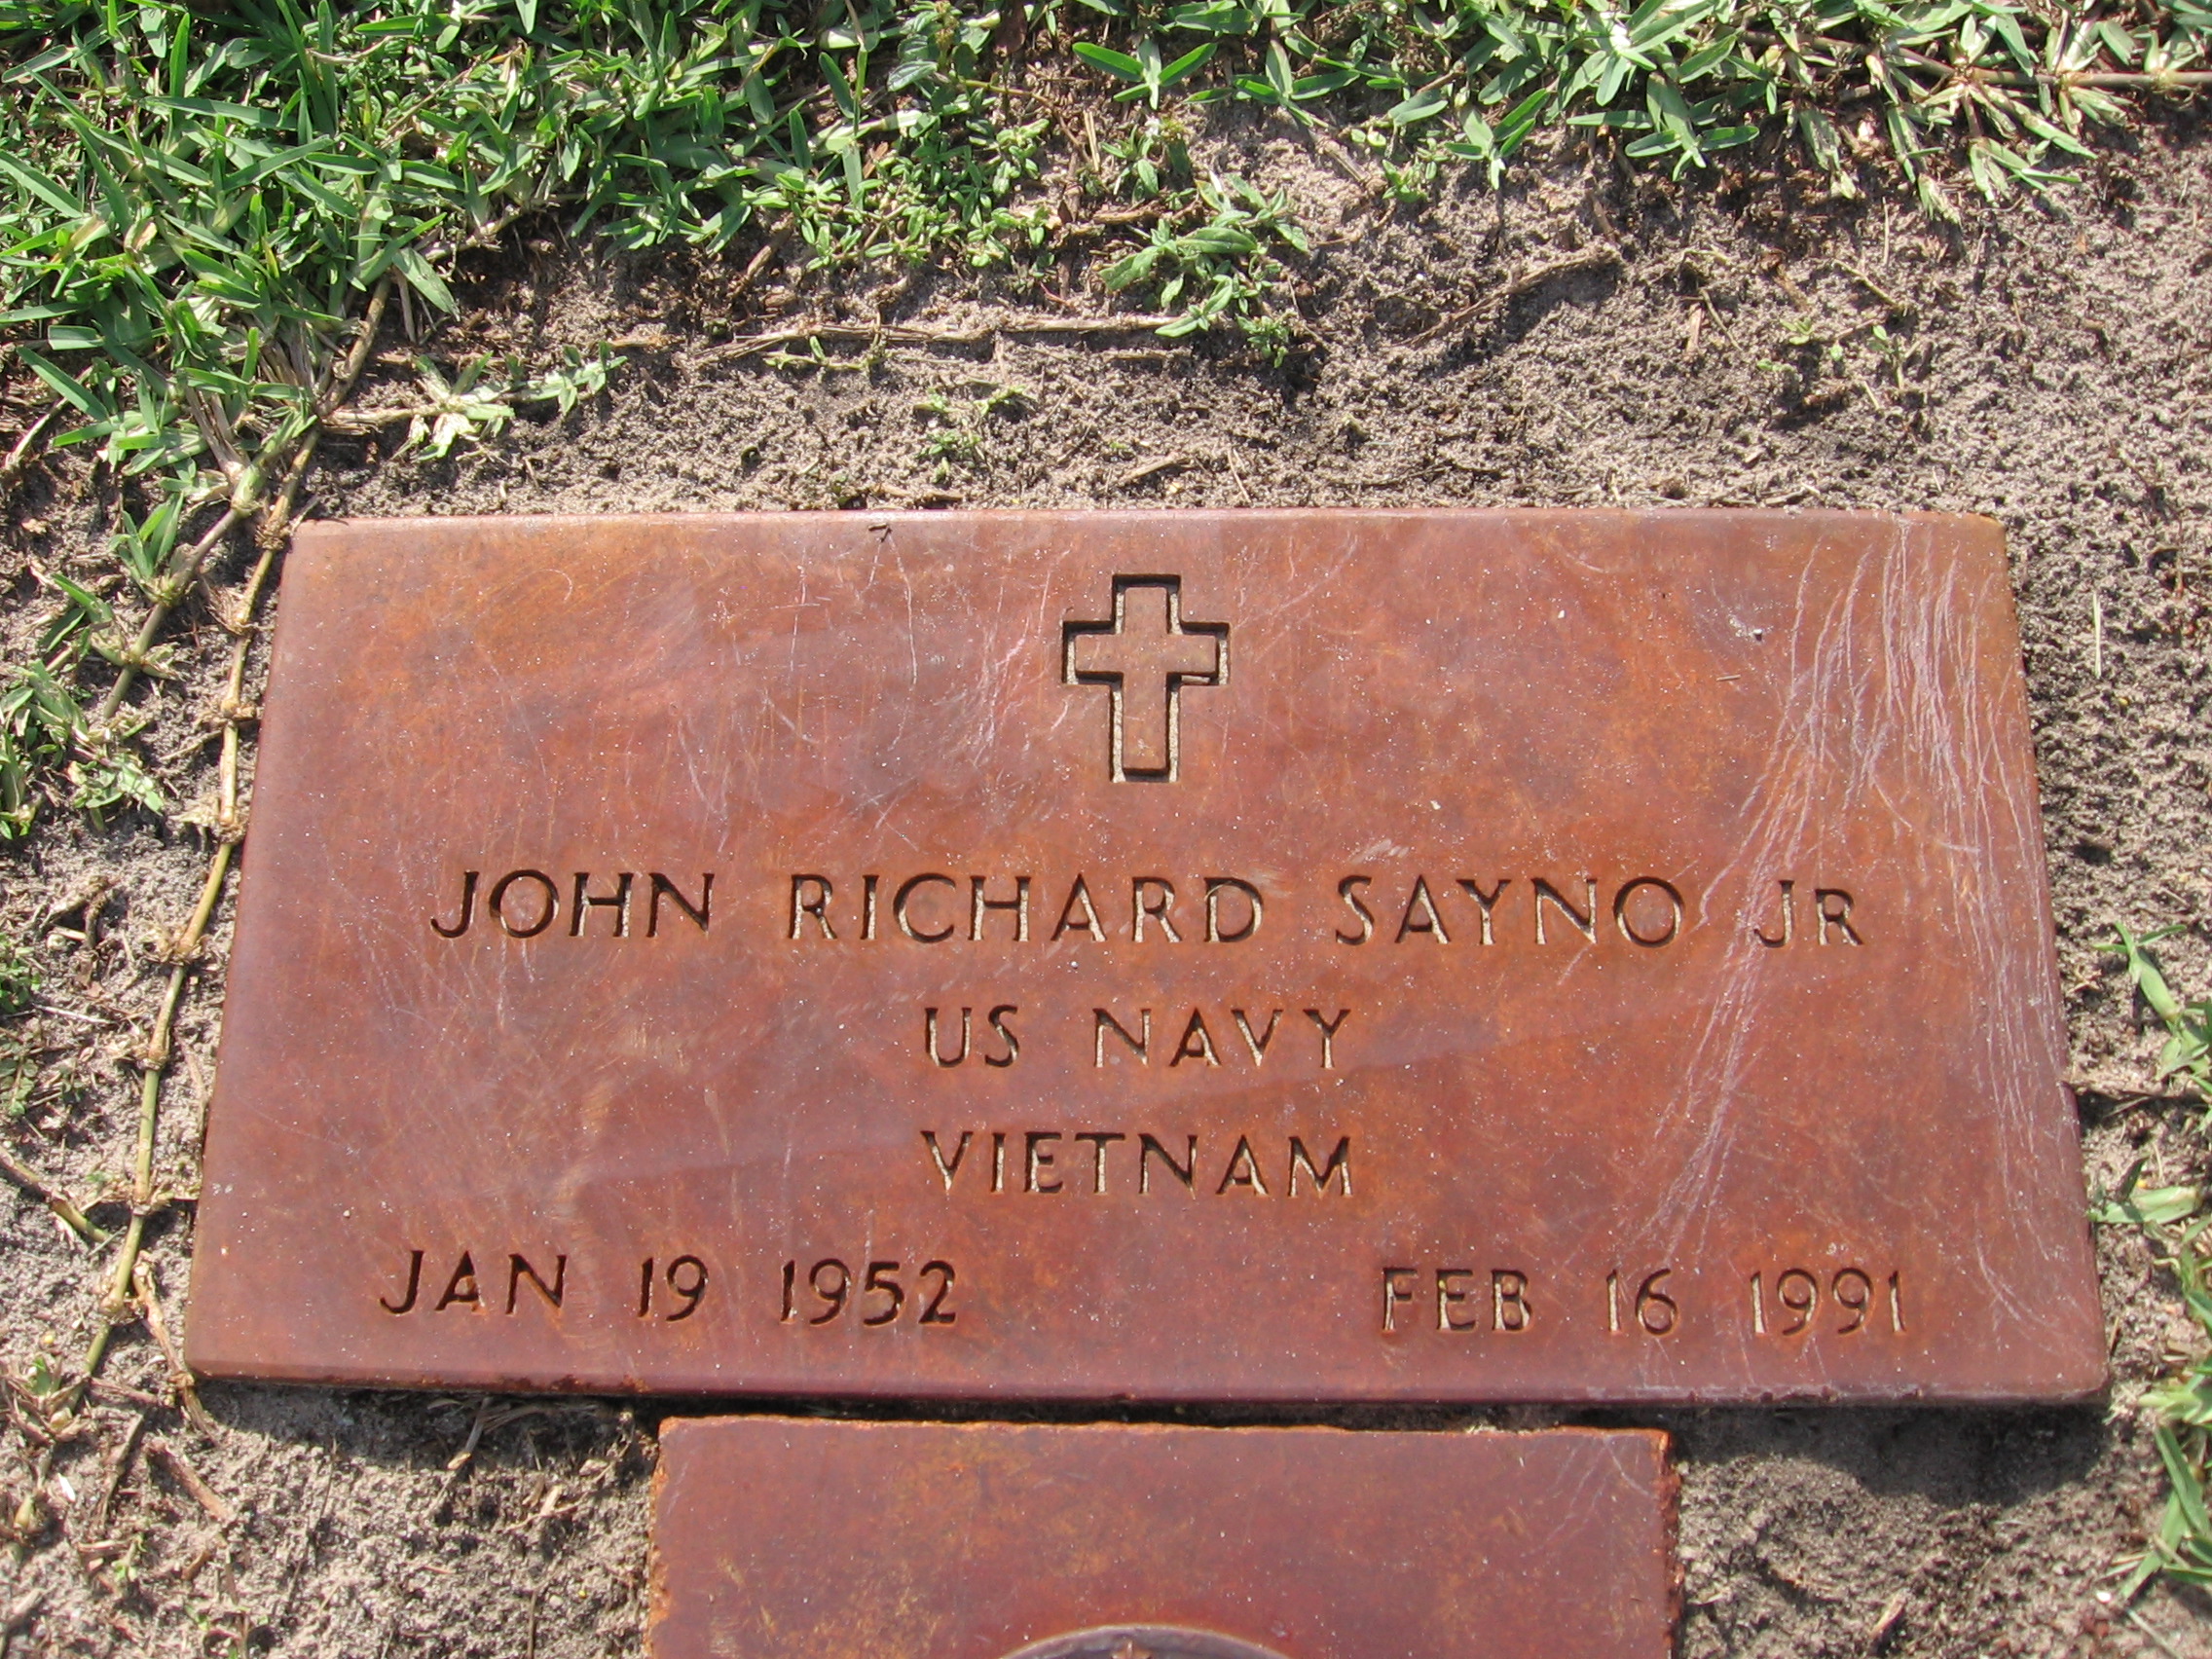 John Richard Sayno, Jr